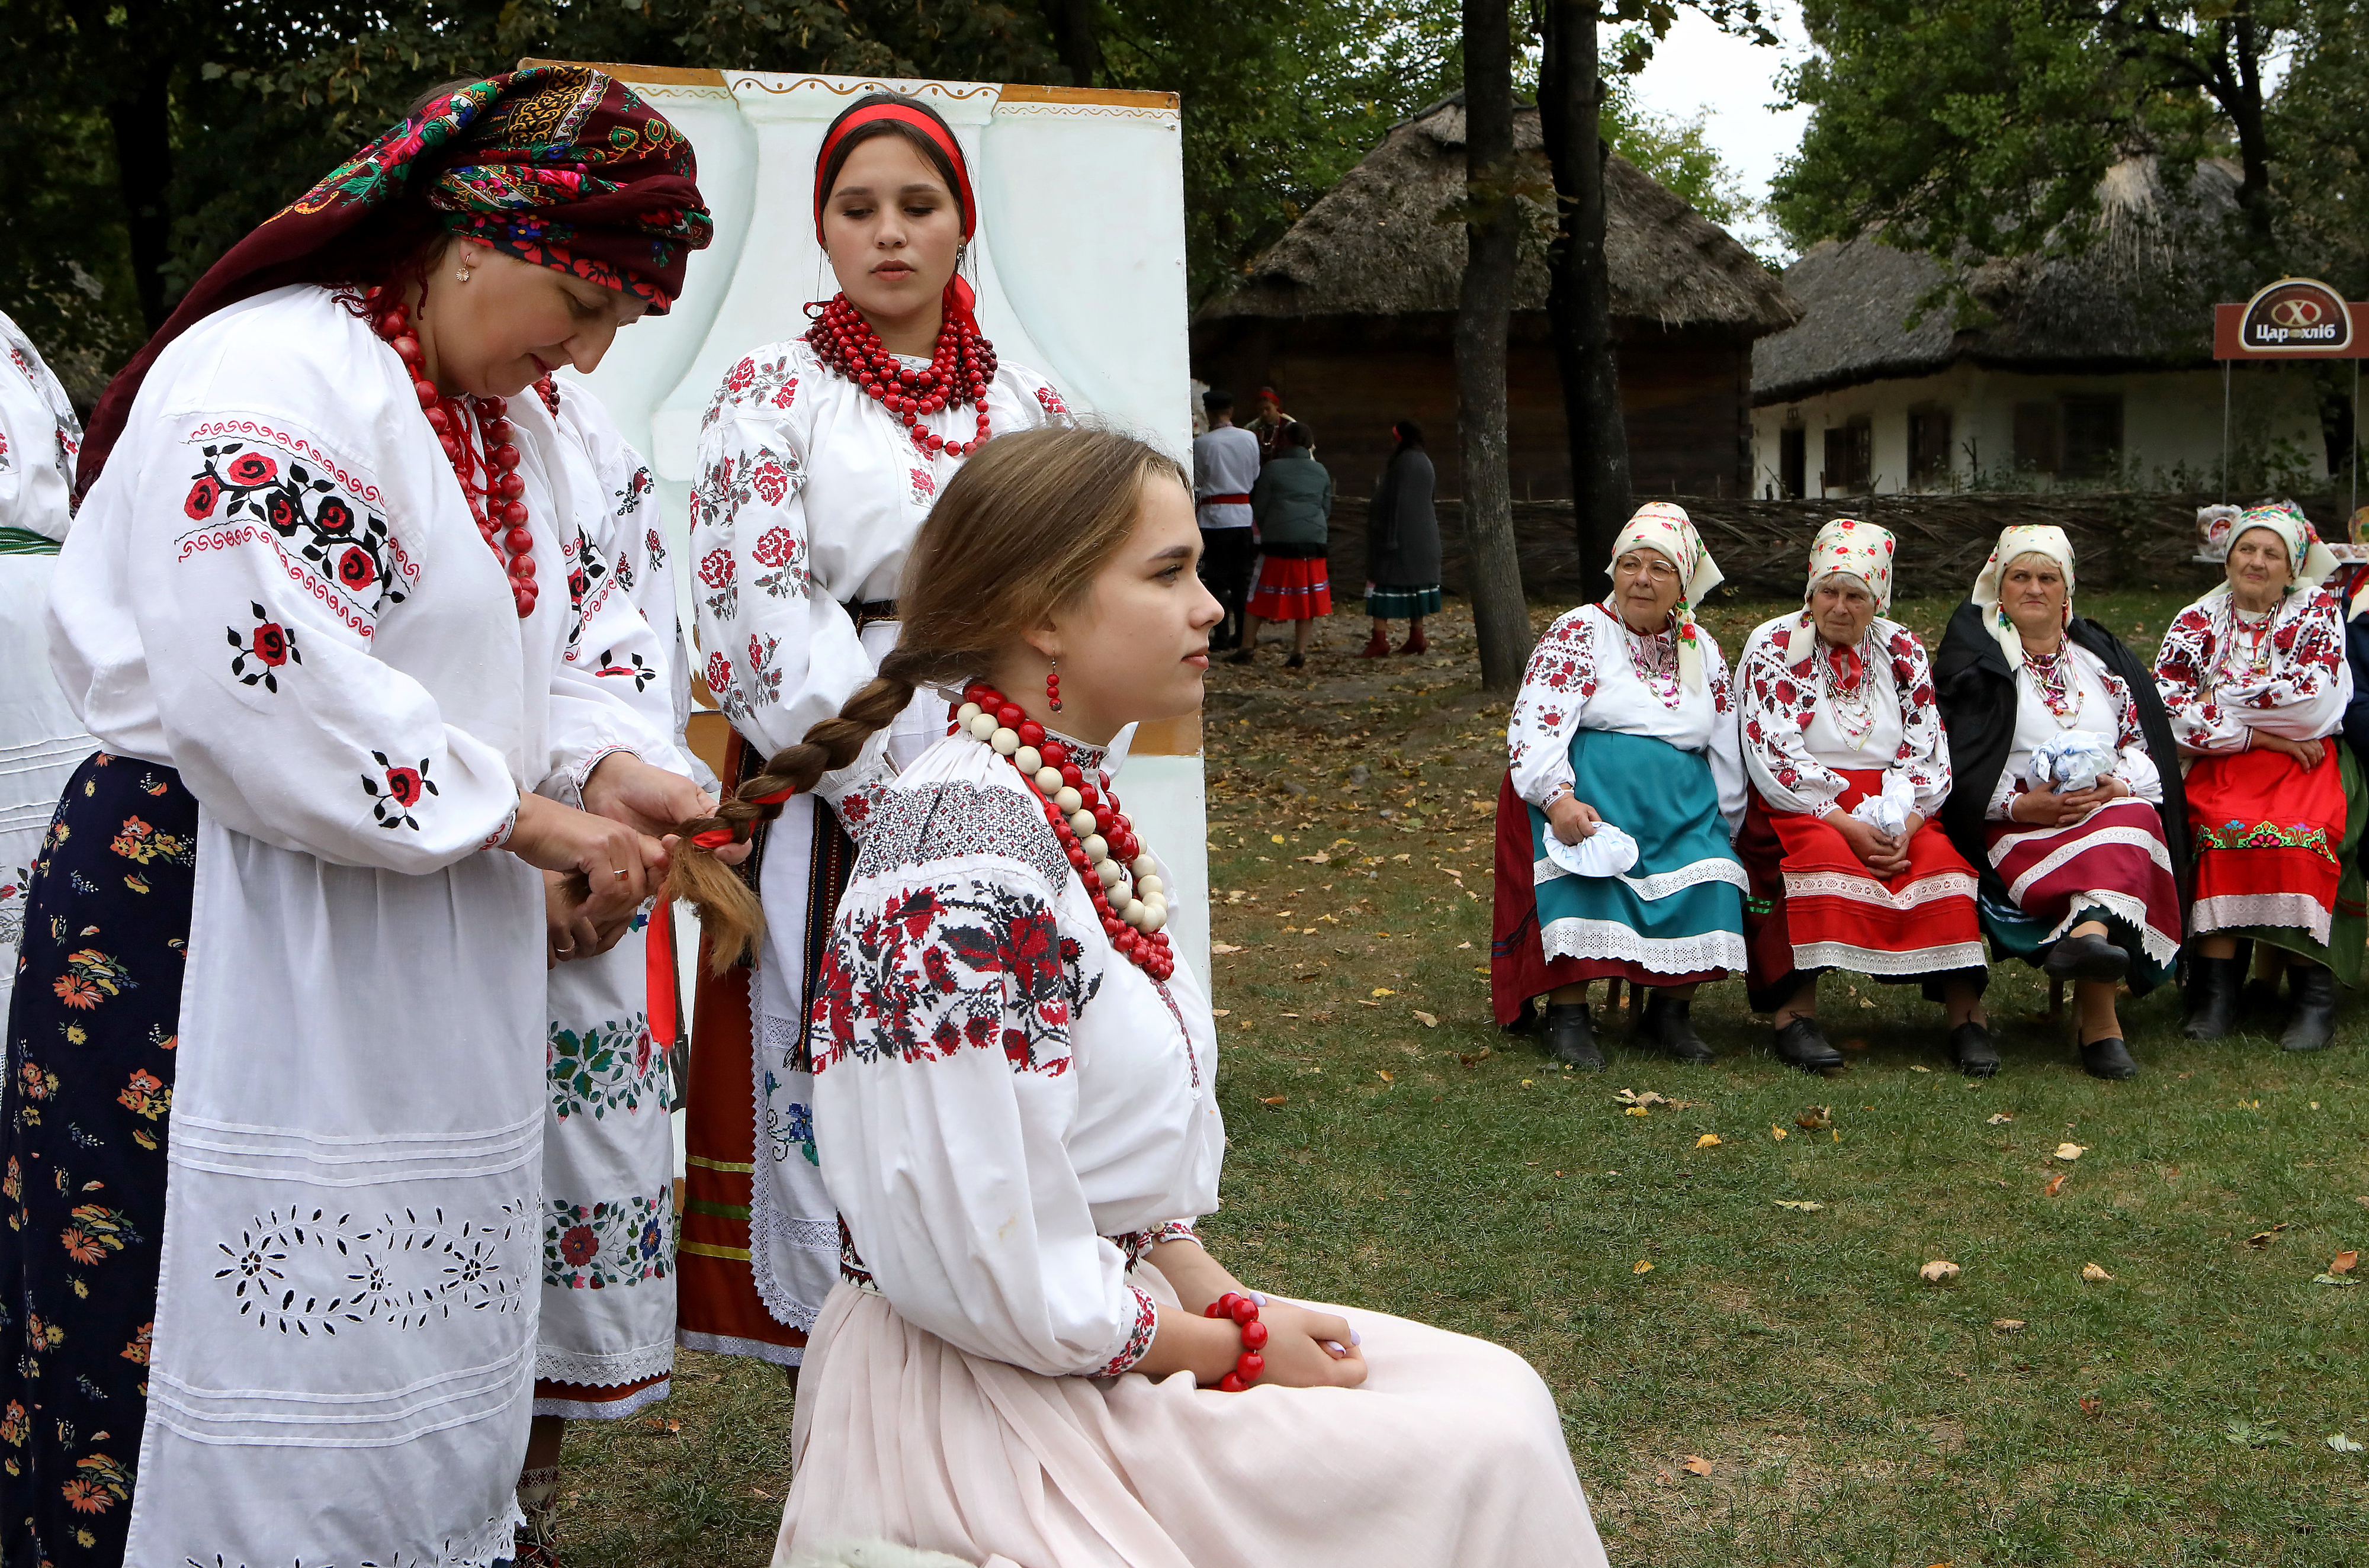 Vyshyvanka, Ukraine's traditional embroidered shirt